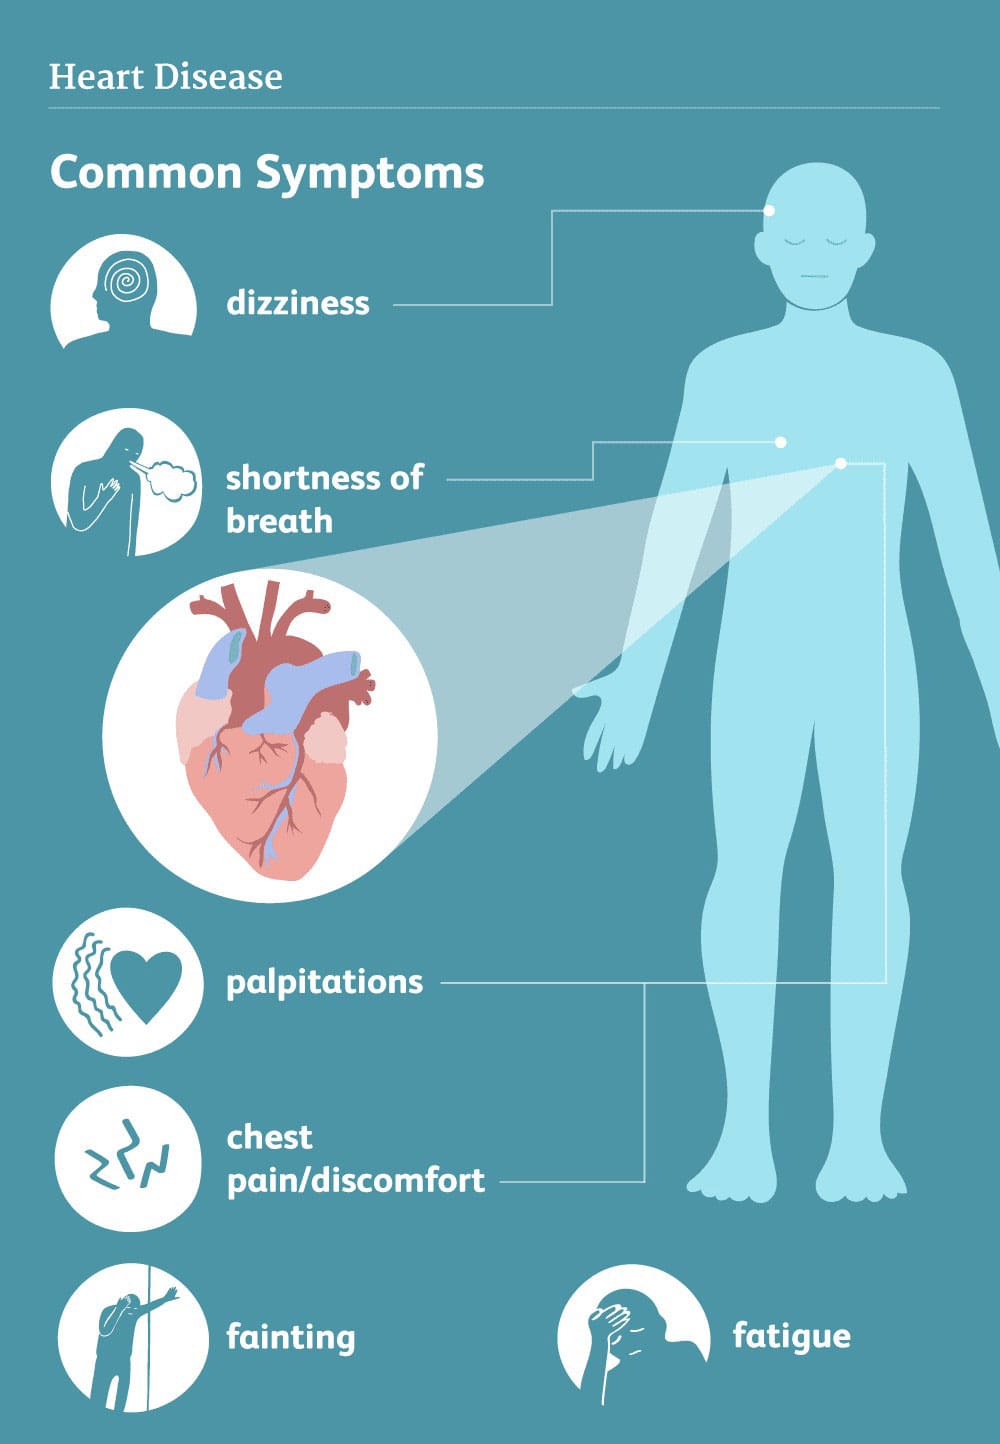 Common Symptoms of Congenital Heart Disease